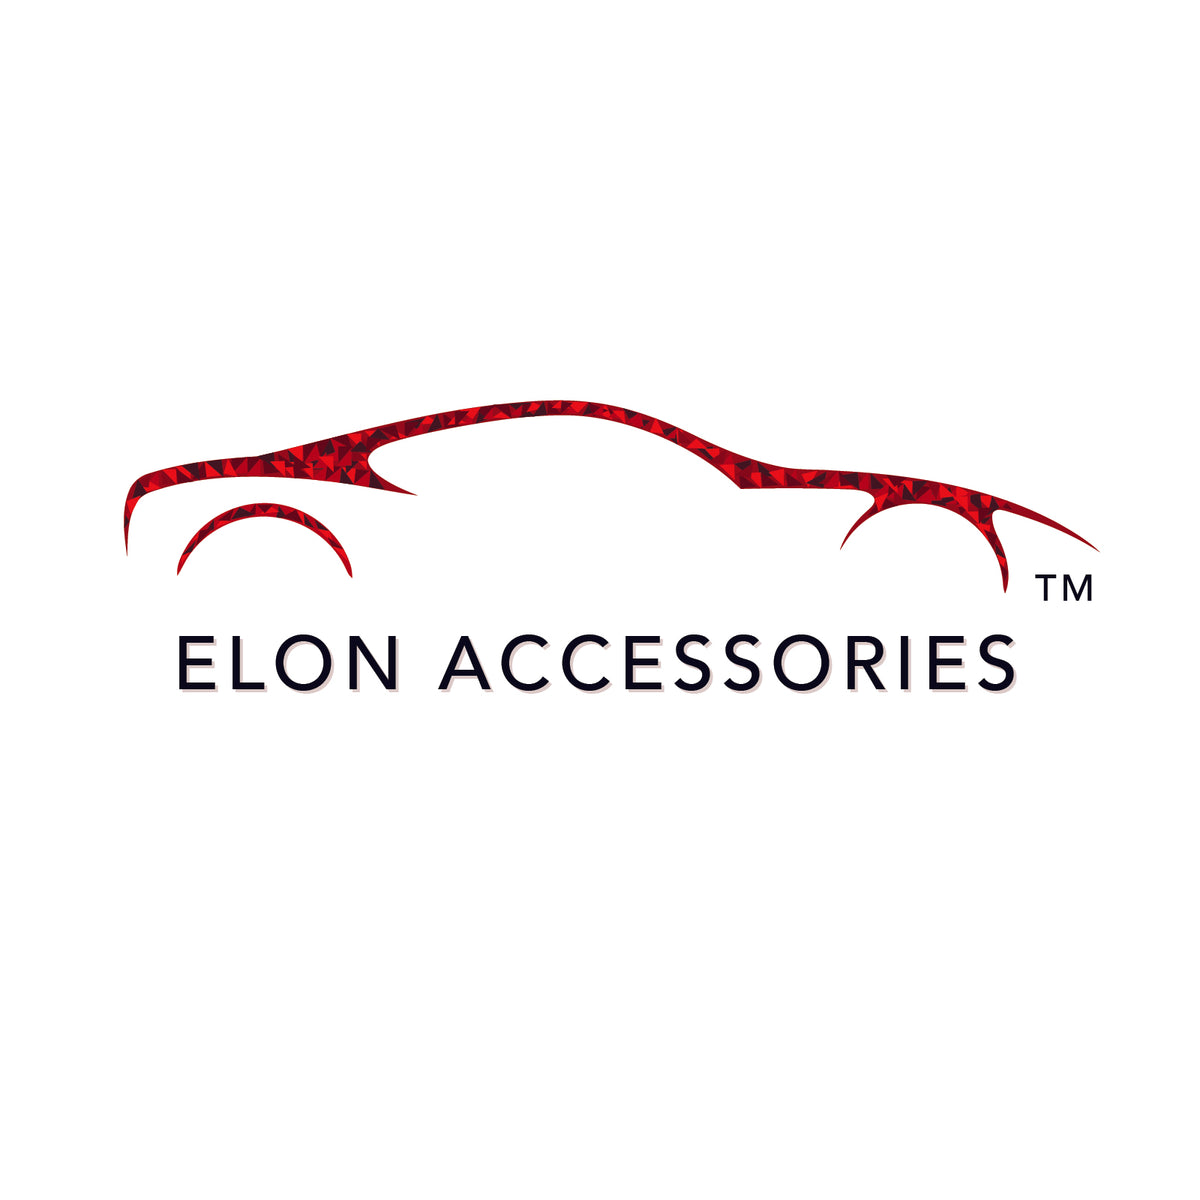 Elon Accessories